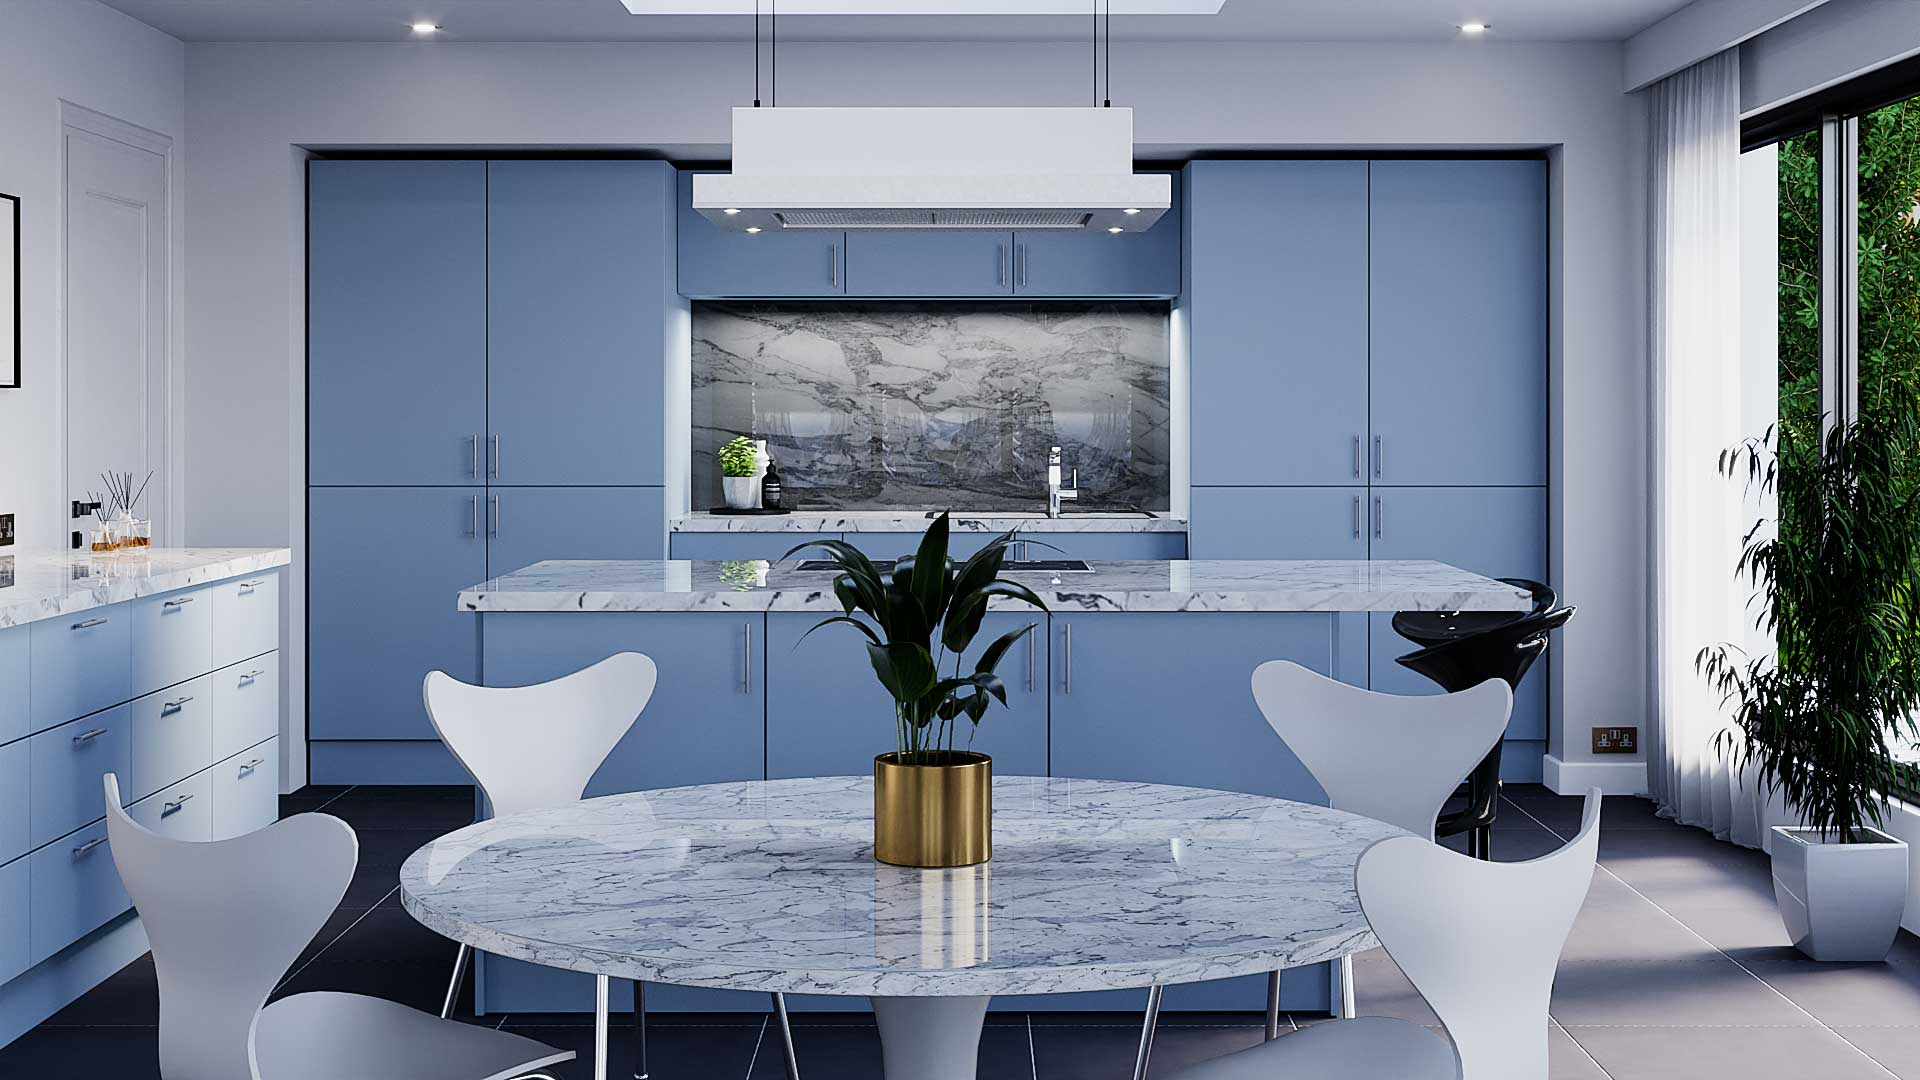 Pretty blue 50s inspired kitchen